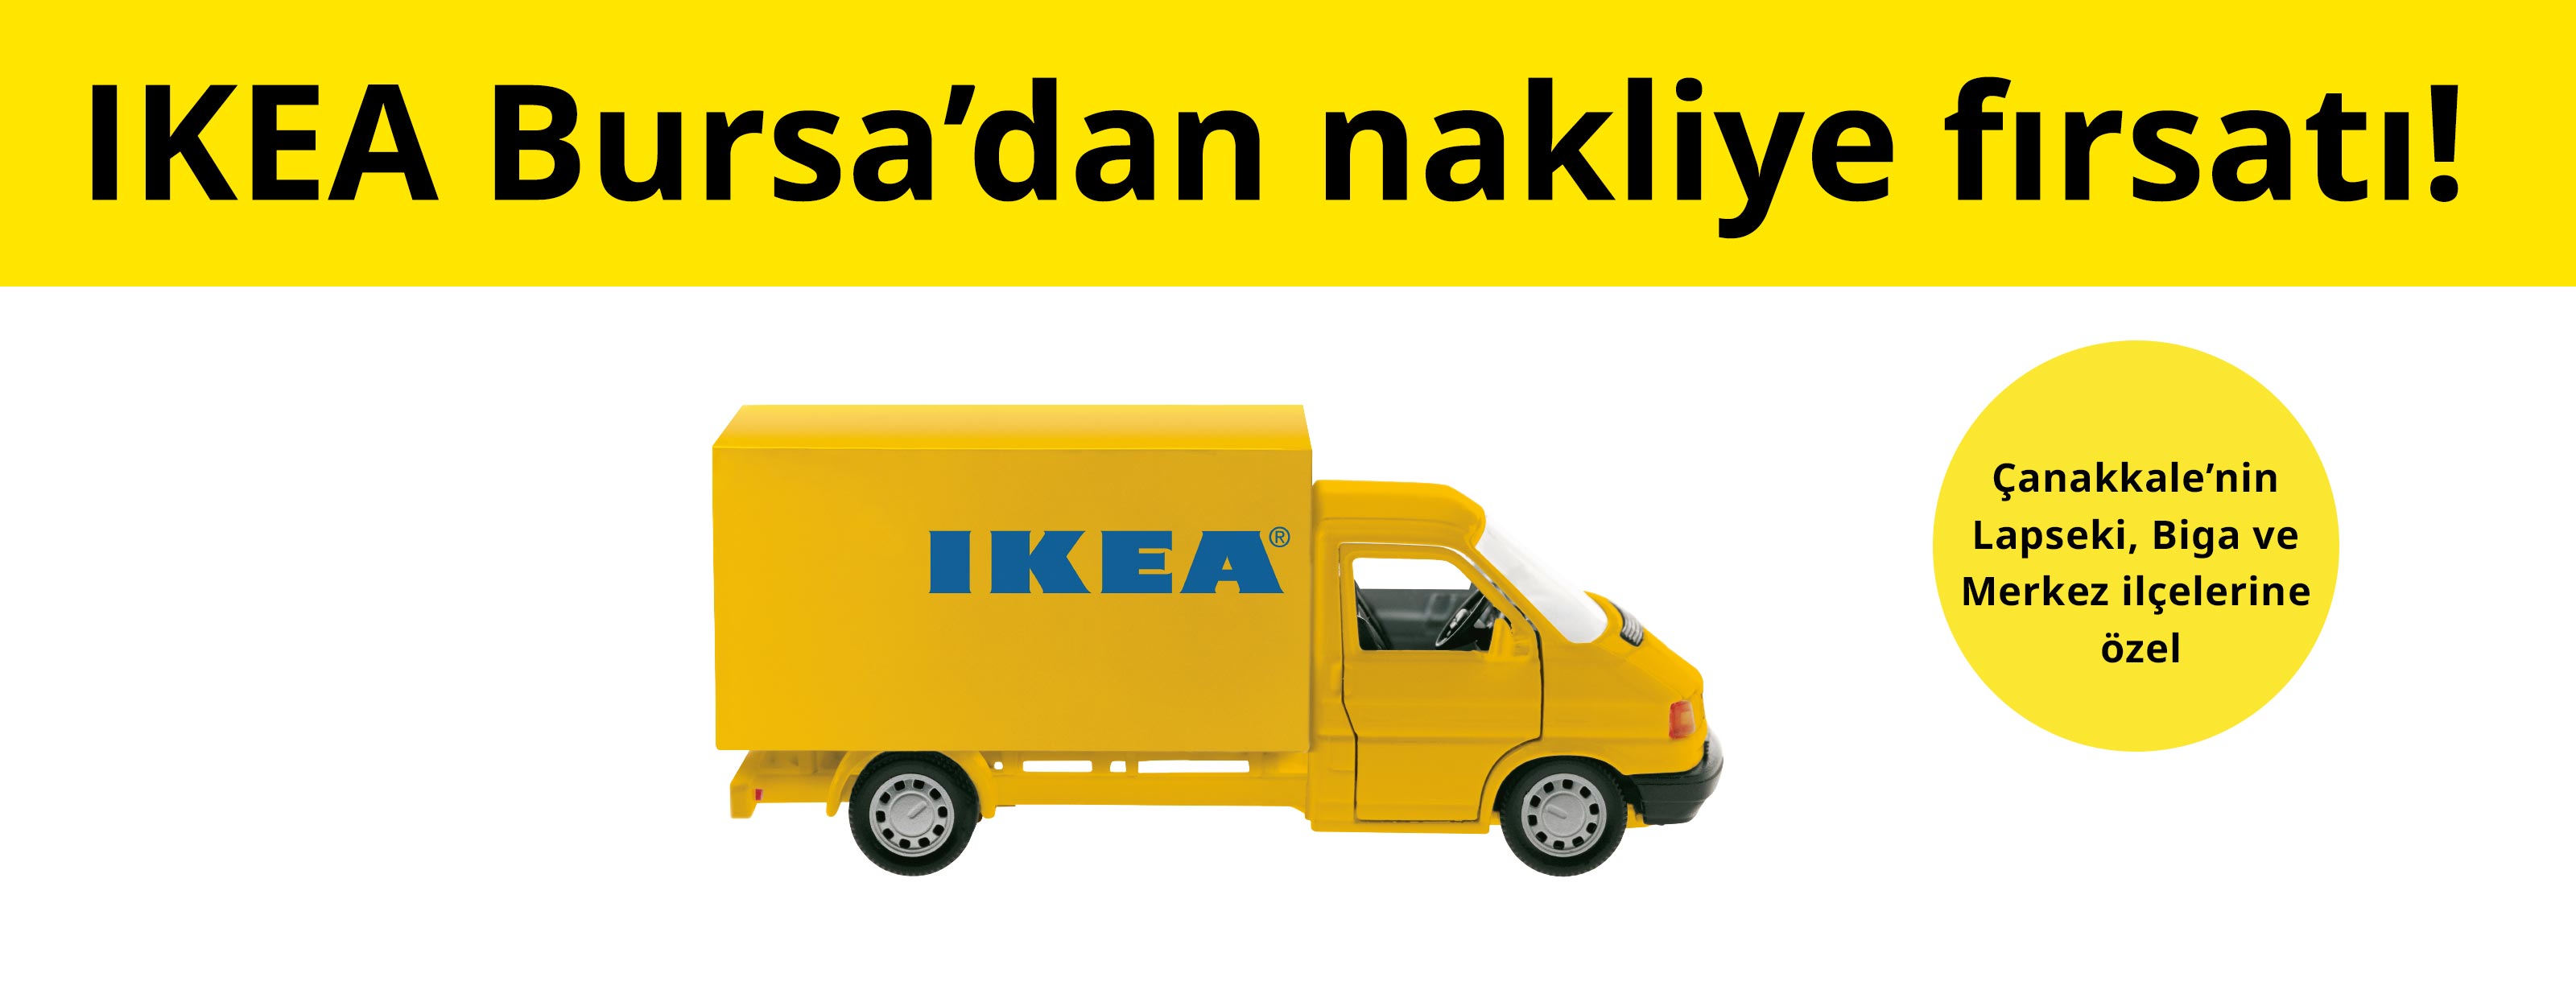 IKEA-ikea bursa canakkale nakliye kampanyasi agustos detay tr